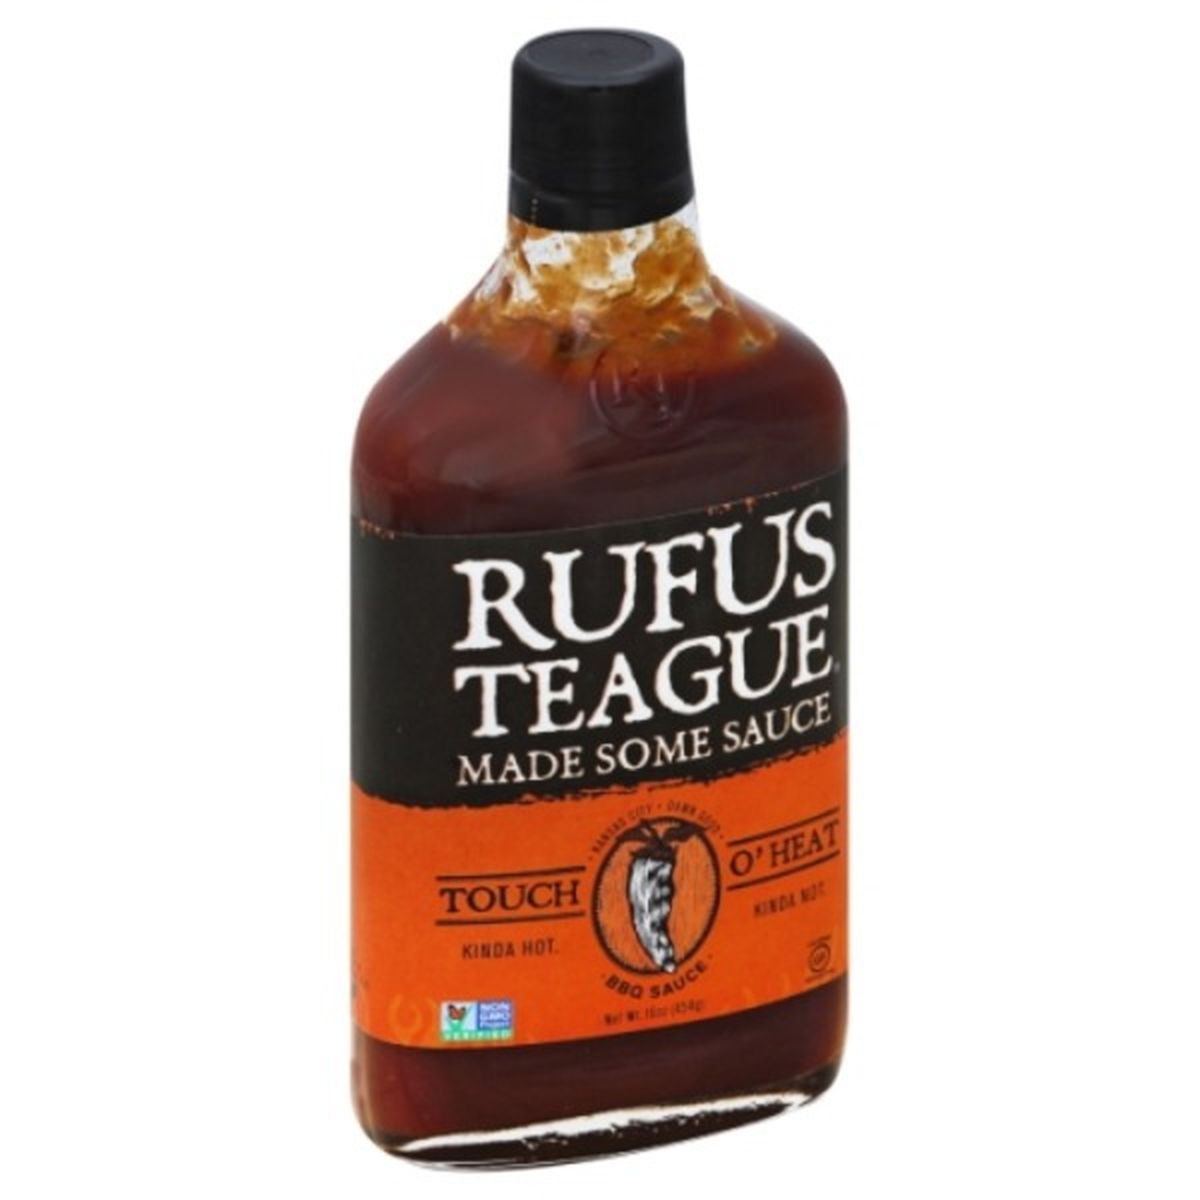 Calories in Rufus Teague BBQ Sauce, Touch O'Heat